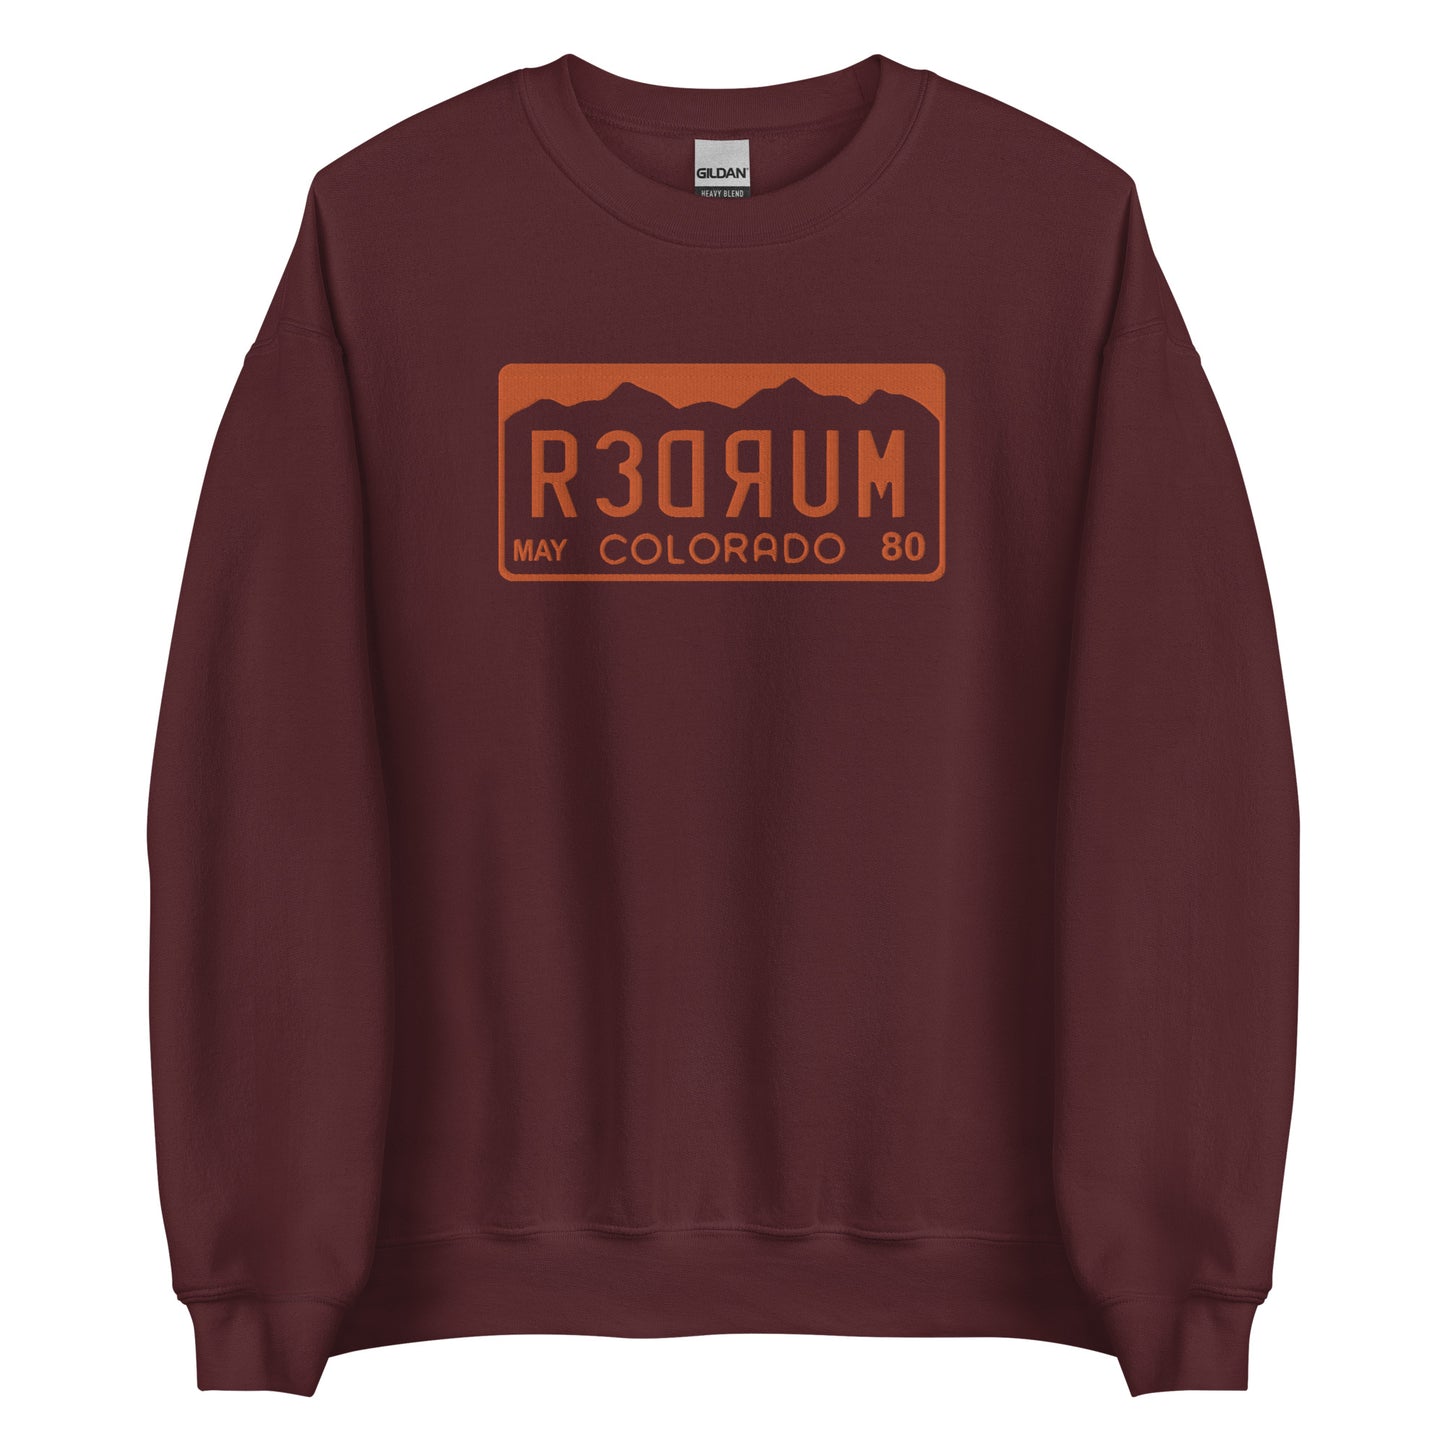 REDRUM embroidered crewneck sweatshirt